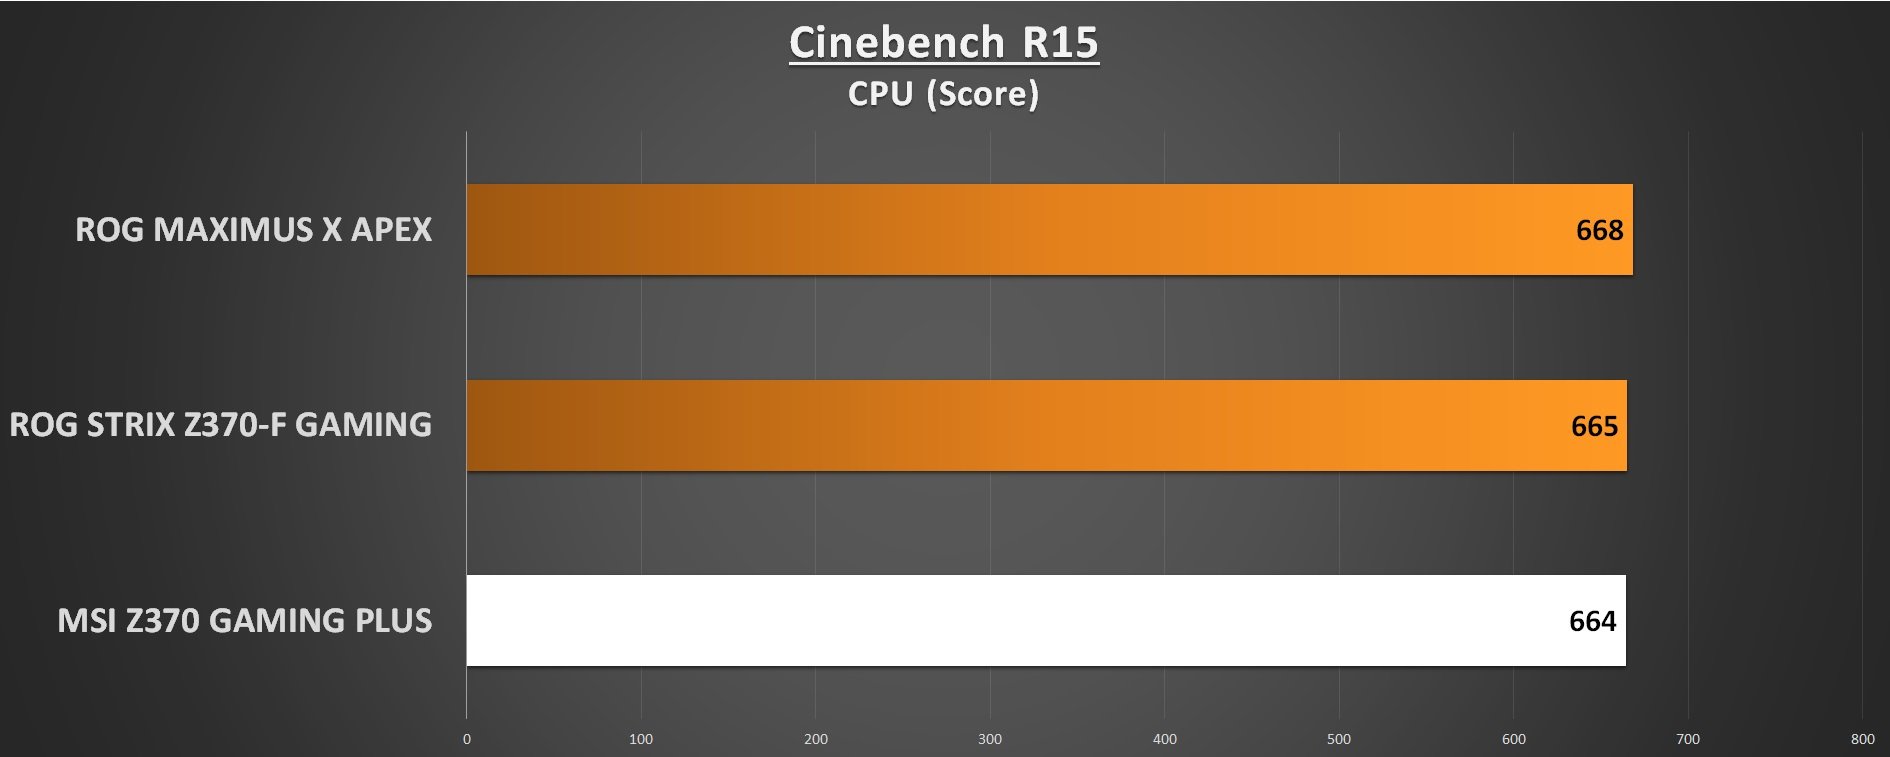 Cinebench R15